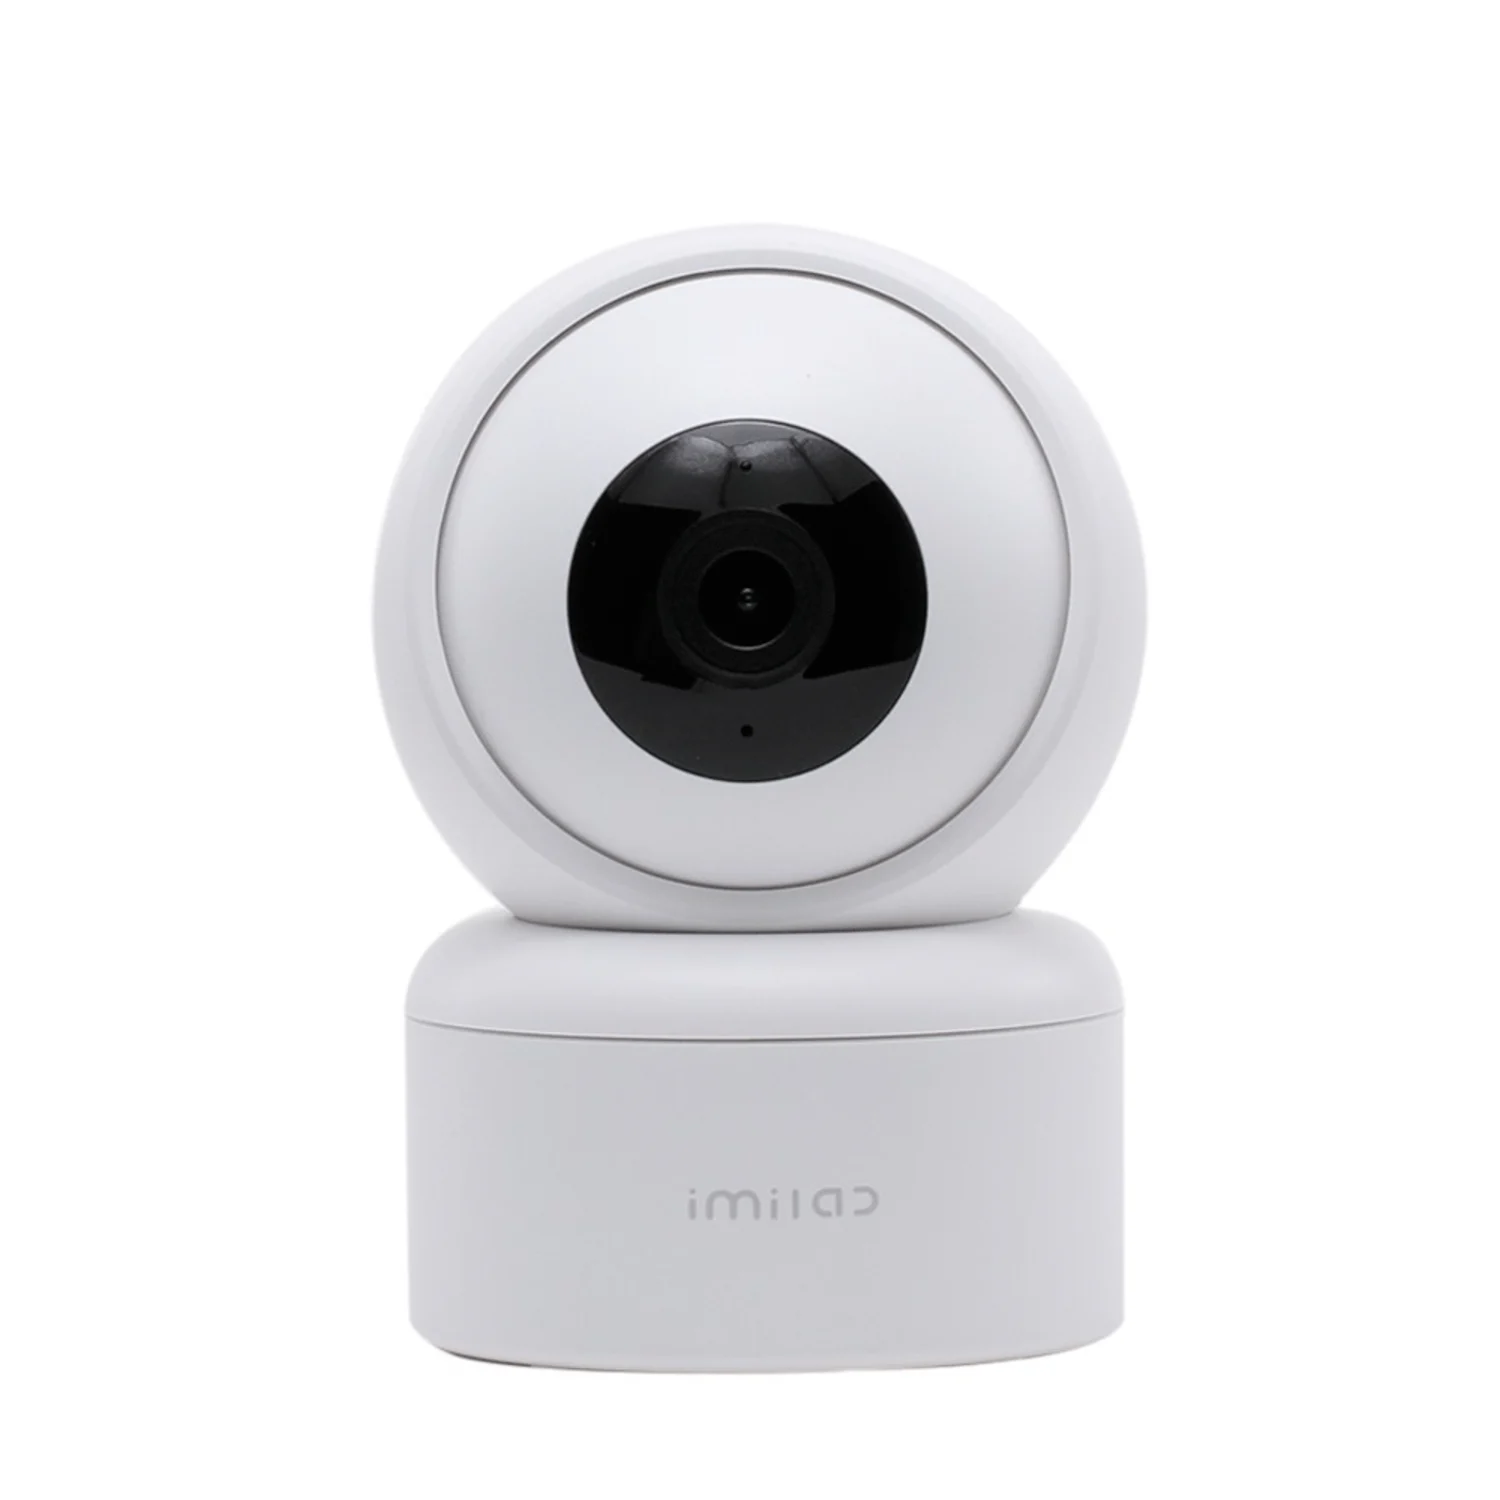 Câmera de Segurança Imilab C20 CMSXJ36A 360° Full HD WiFi - Branco